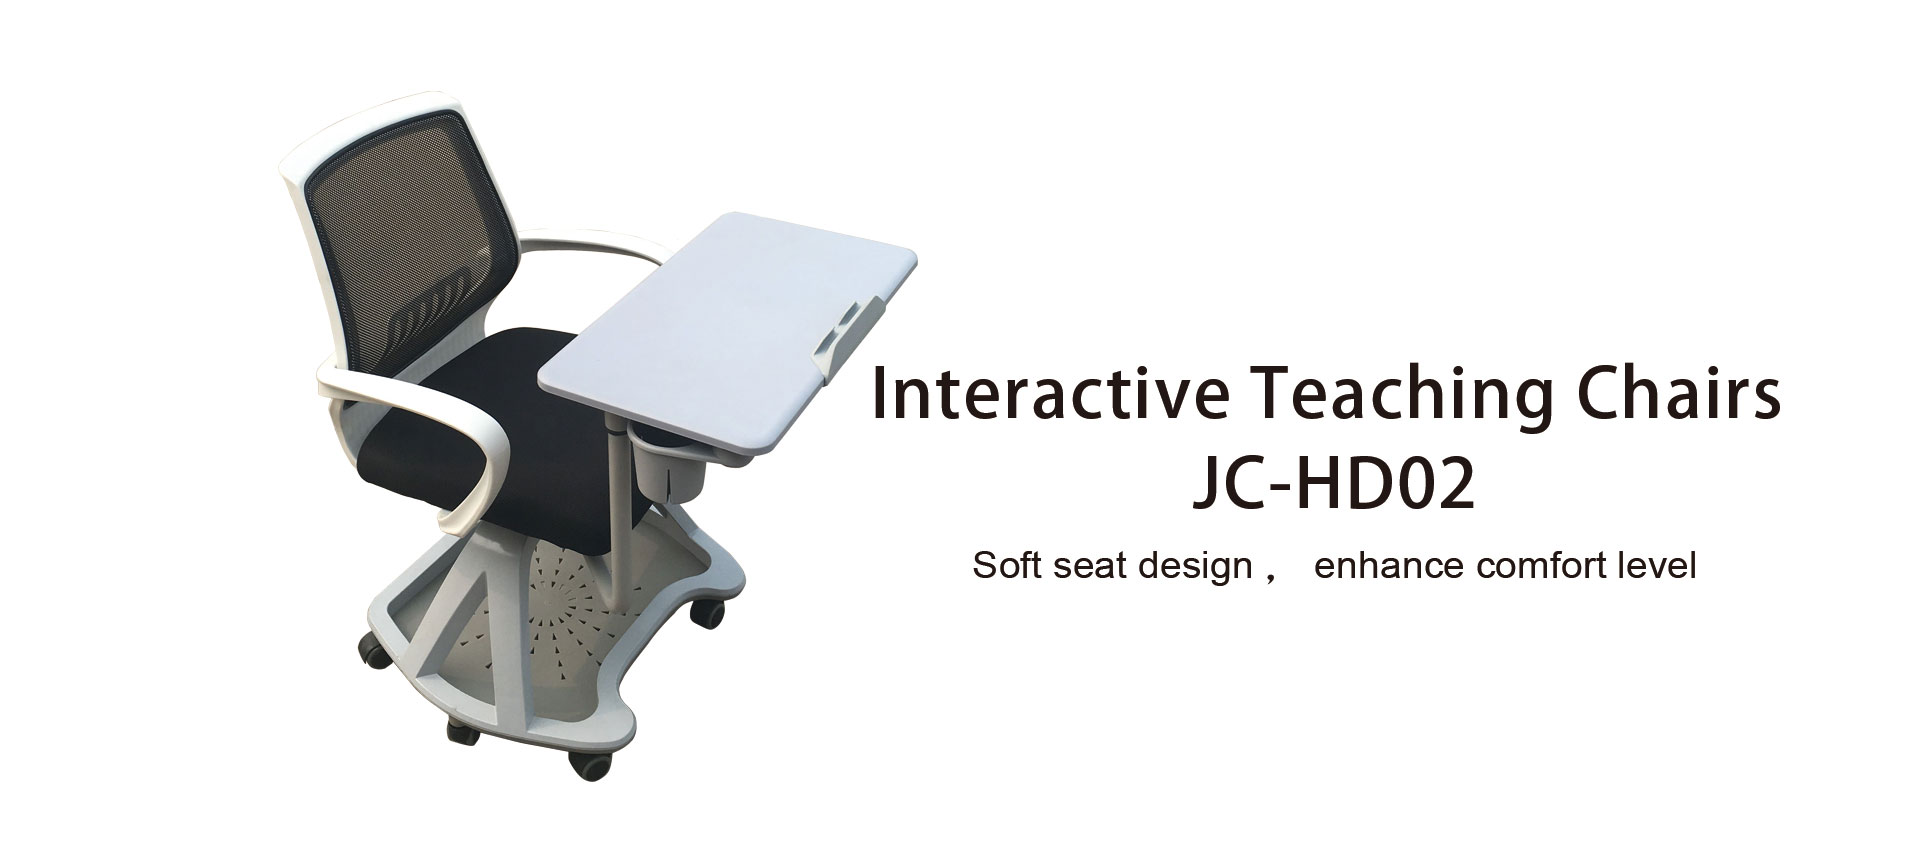 Interactive Teaching Chairs JC-HD02